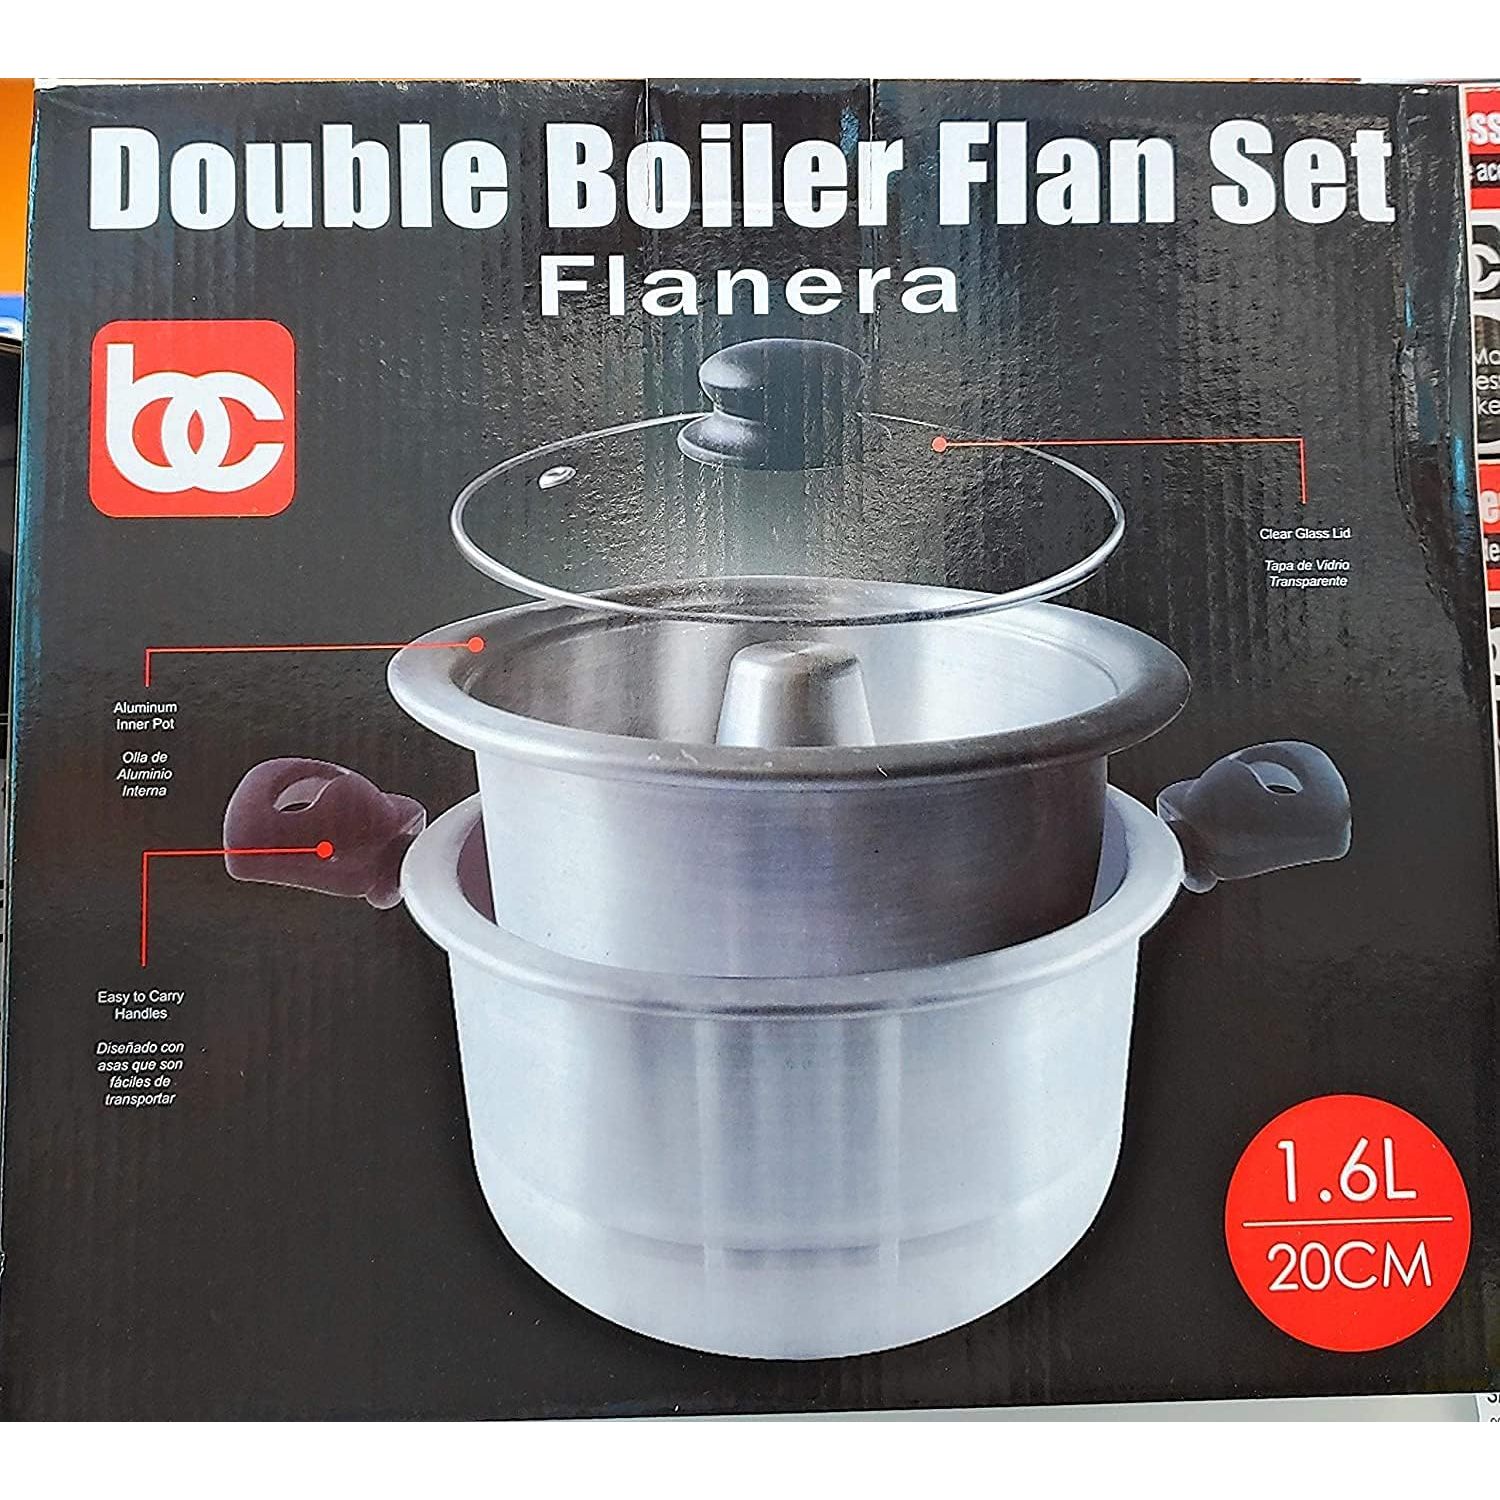 Bene Casa - Aluminum Flan Mold Double Boiler with Glass Lid (1.6 Liter) -  Includes Aluminum Inner Pan (8) - Dishwasher Safe 